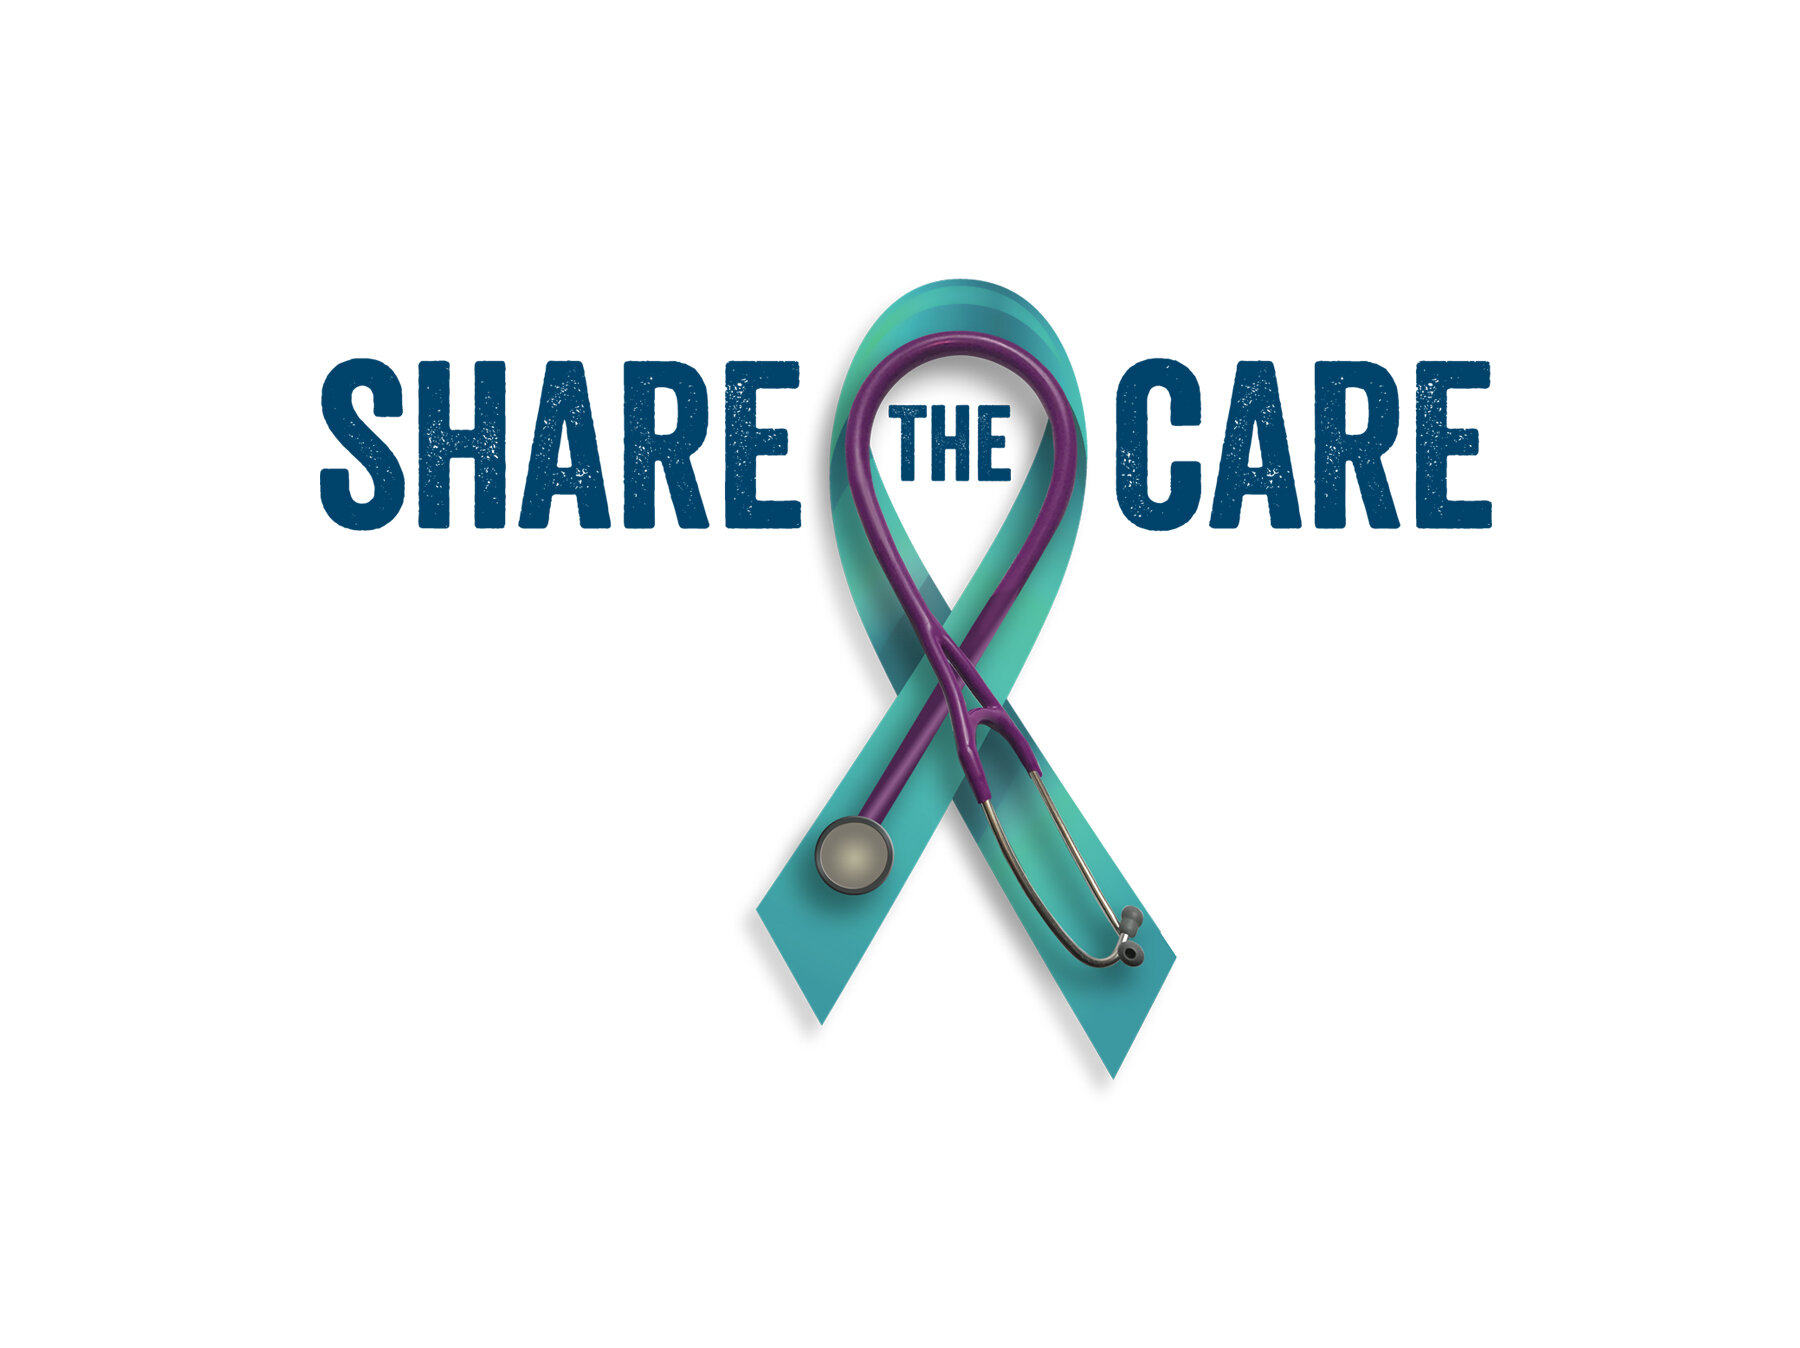 Share-the-care.jpg